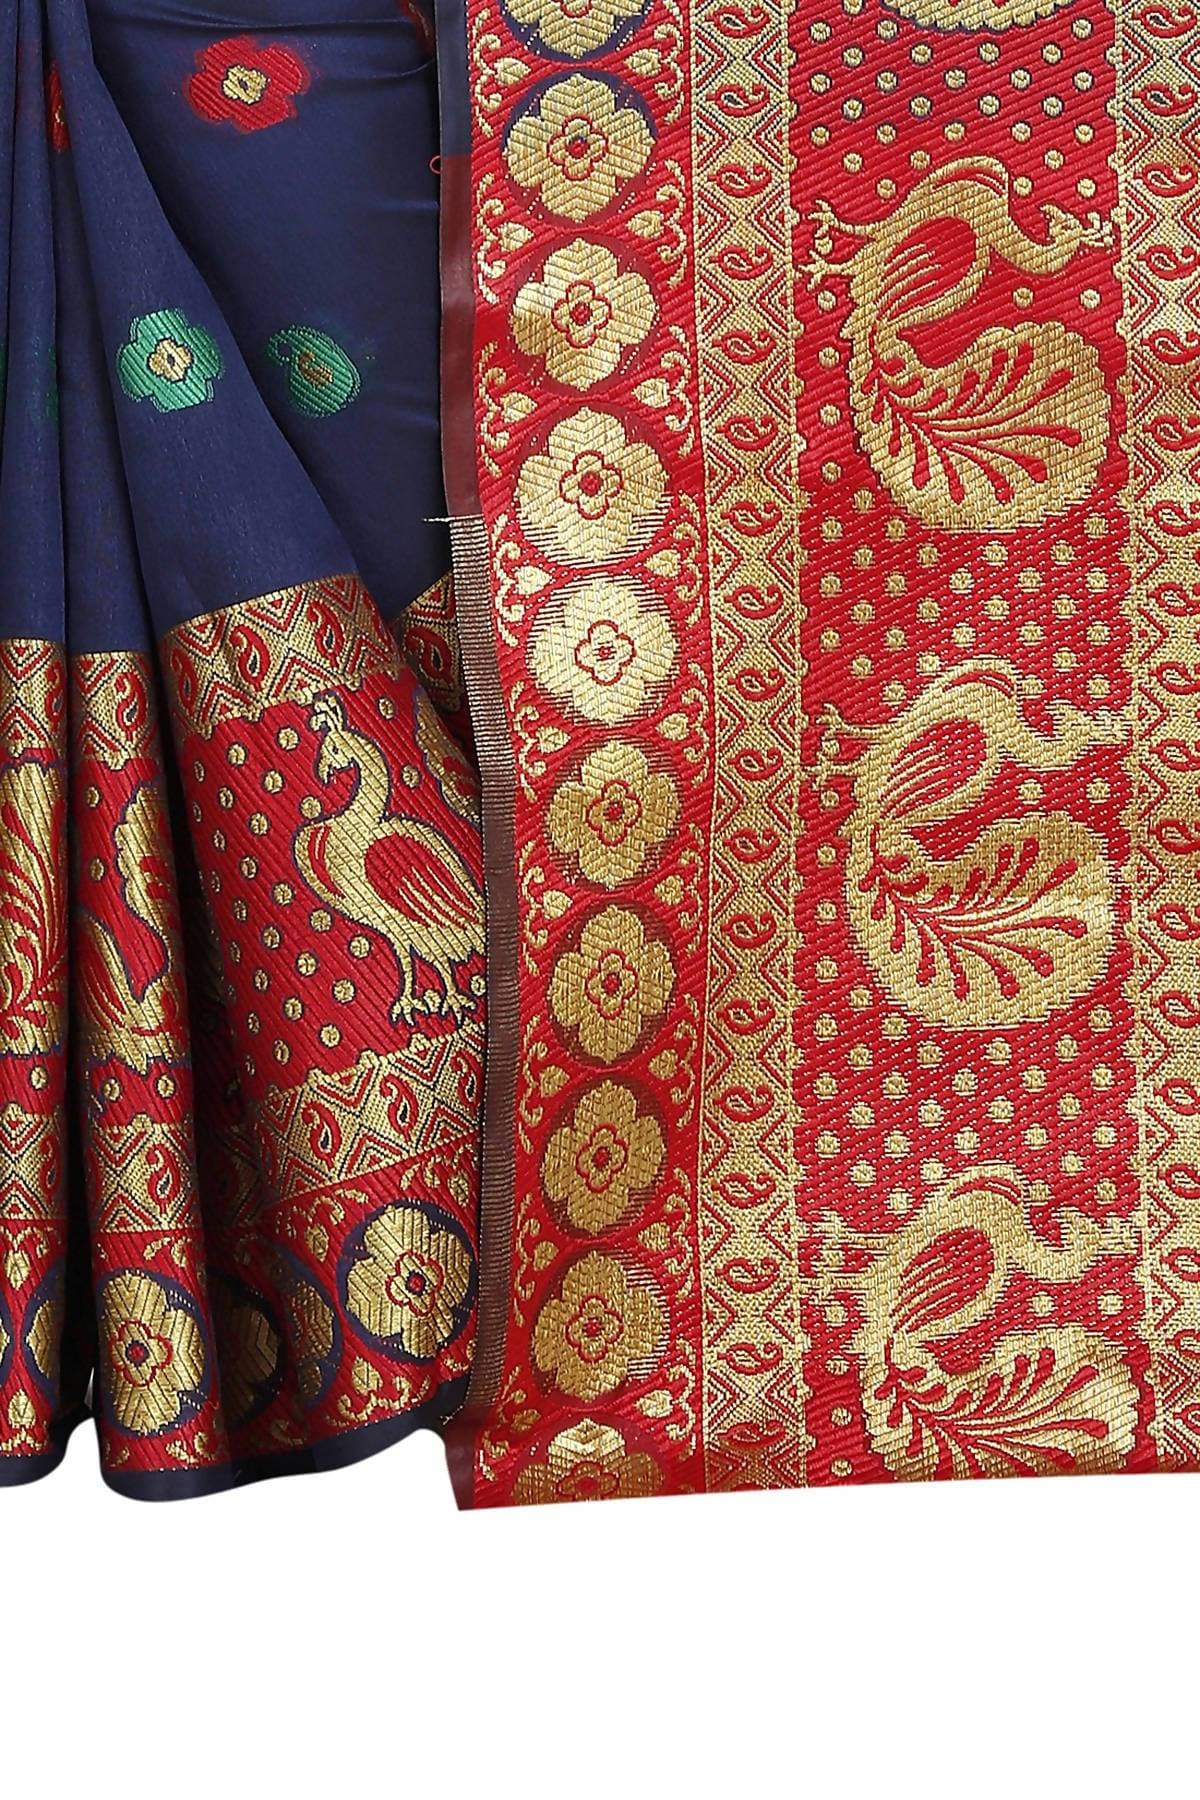 Vamika Banarasi Cotton Silk Navy Blue Weaving Saree